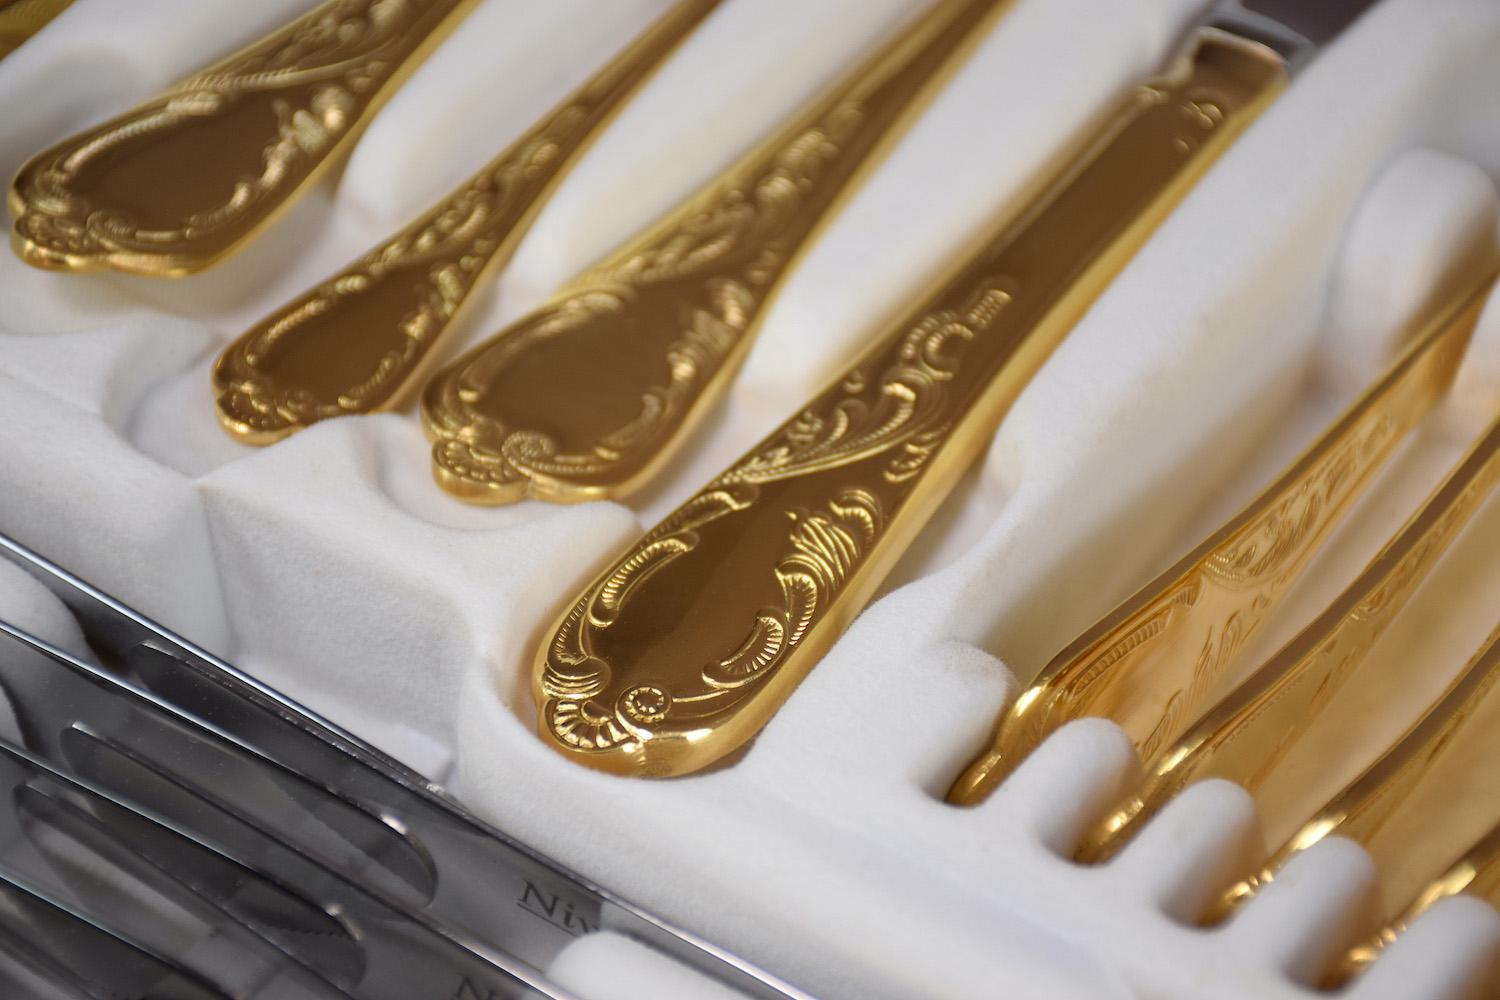 24 Karat 11 Pers, Flatware Cutlery Set by Nivella Solingen 5